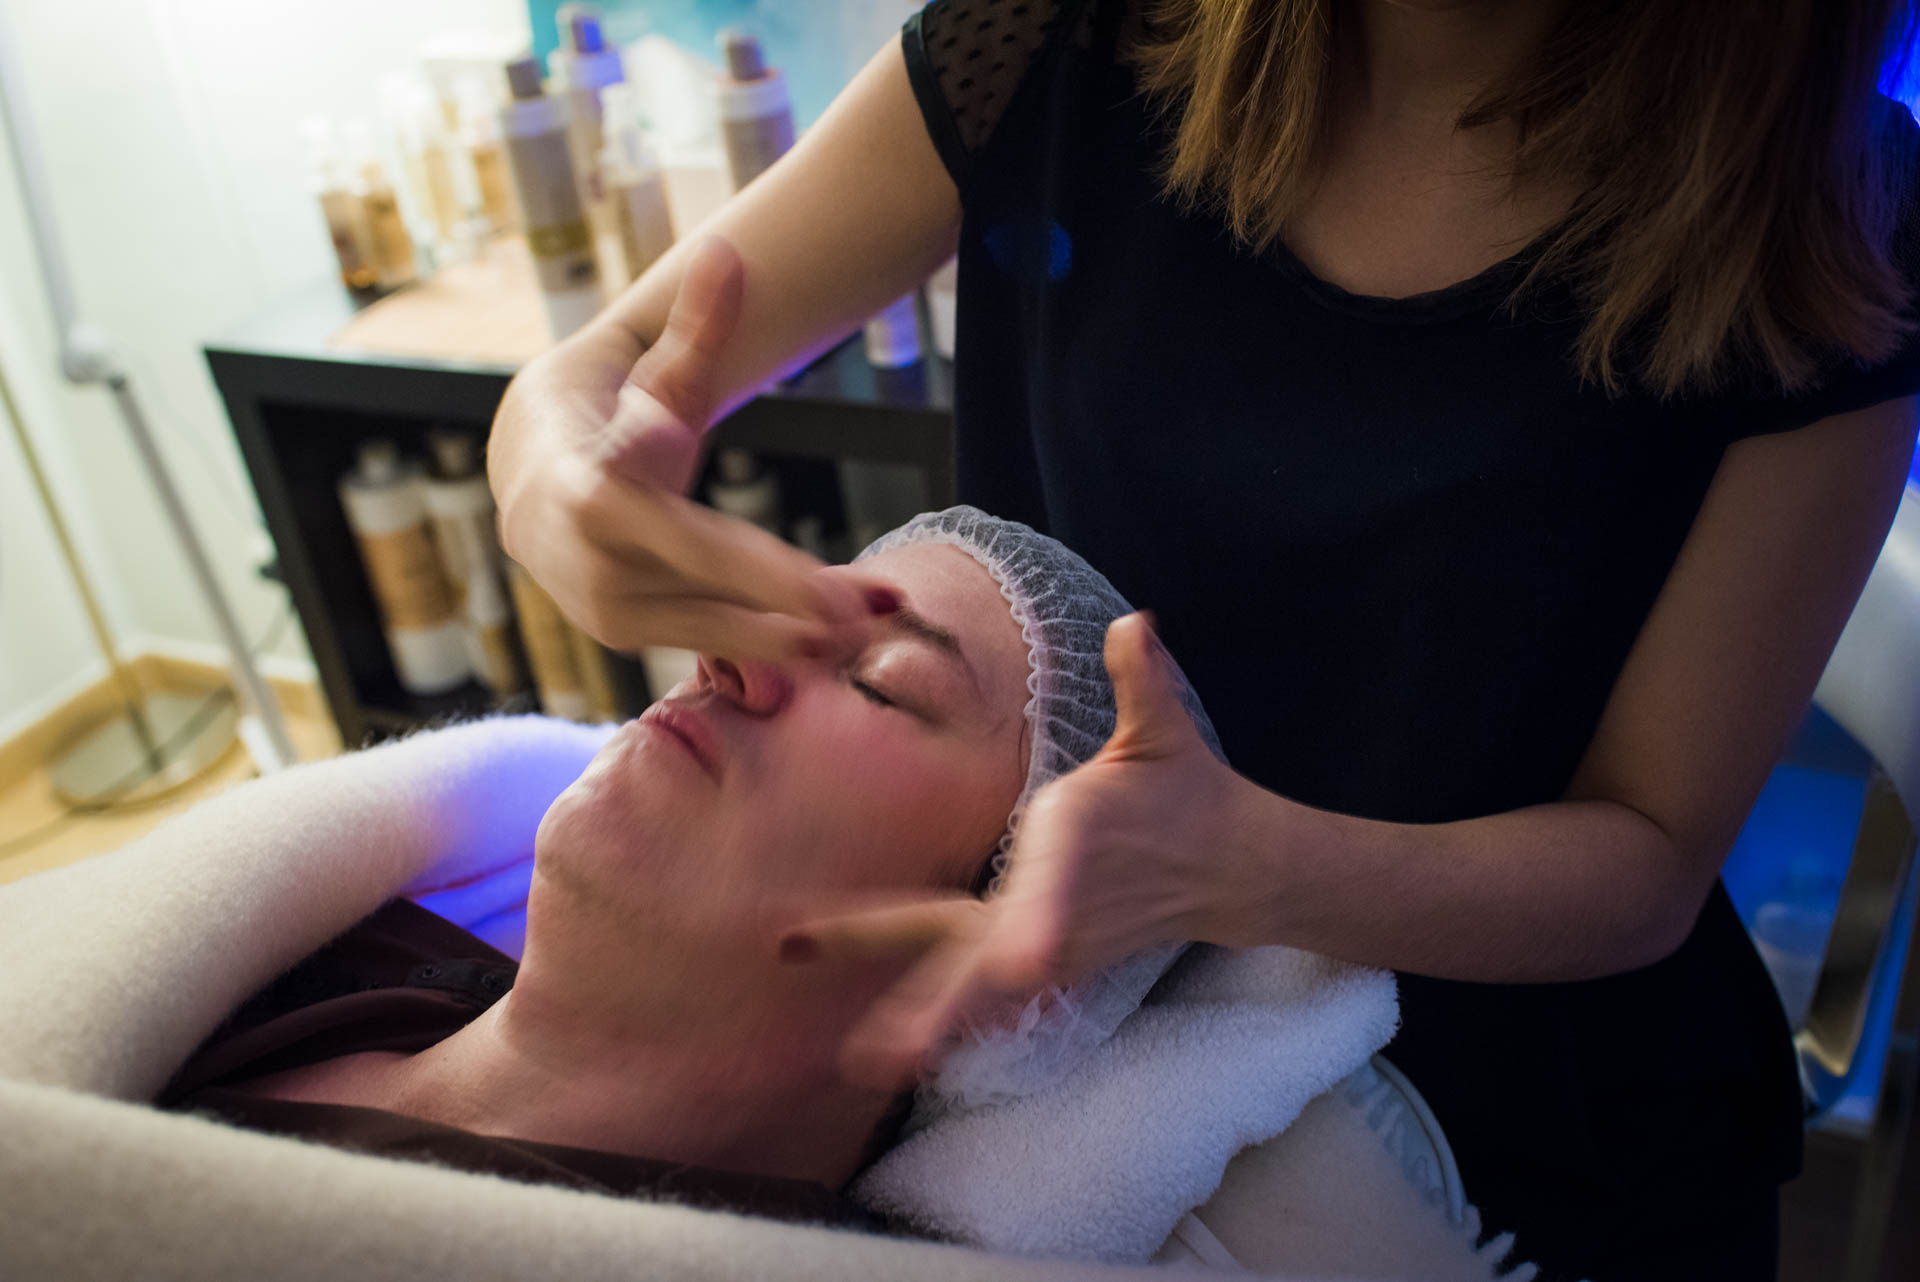 Bioterapia facial belleza masculina Purificacion Varas Madrid a tu estilo